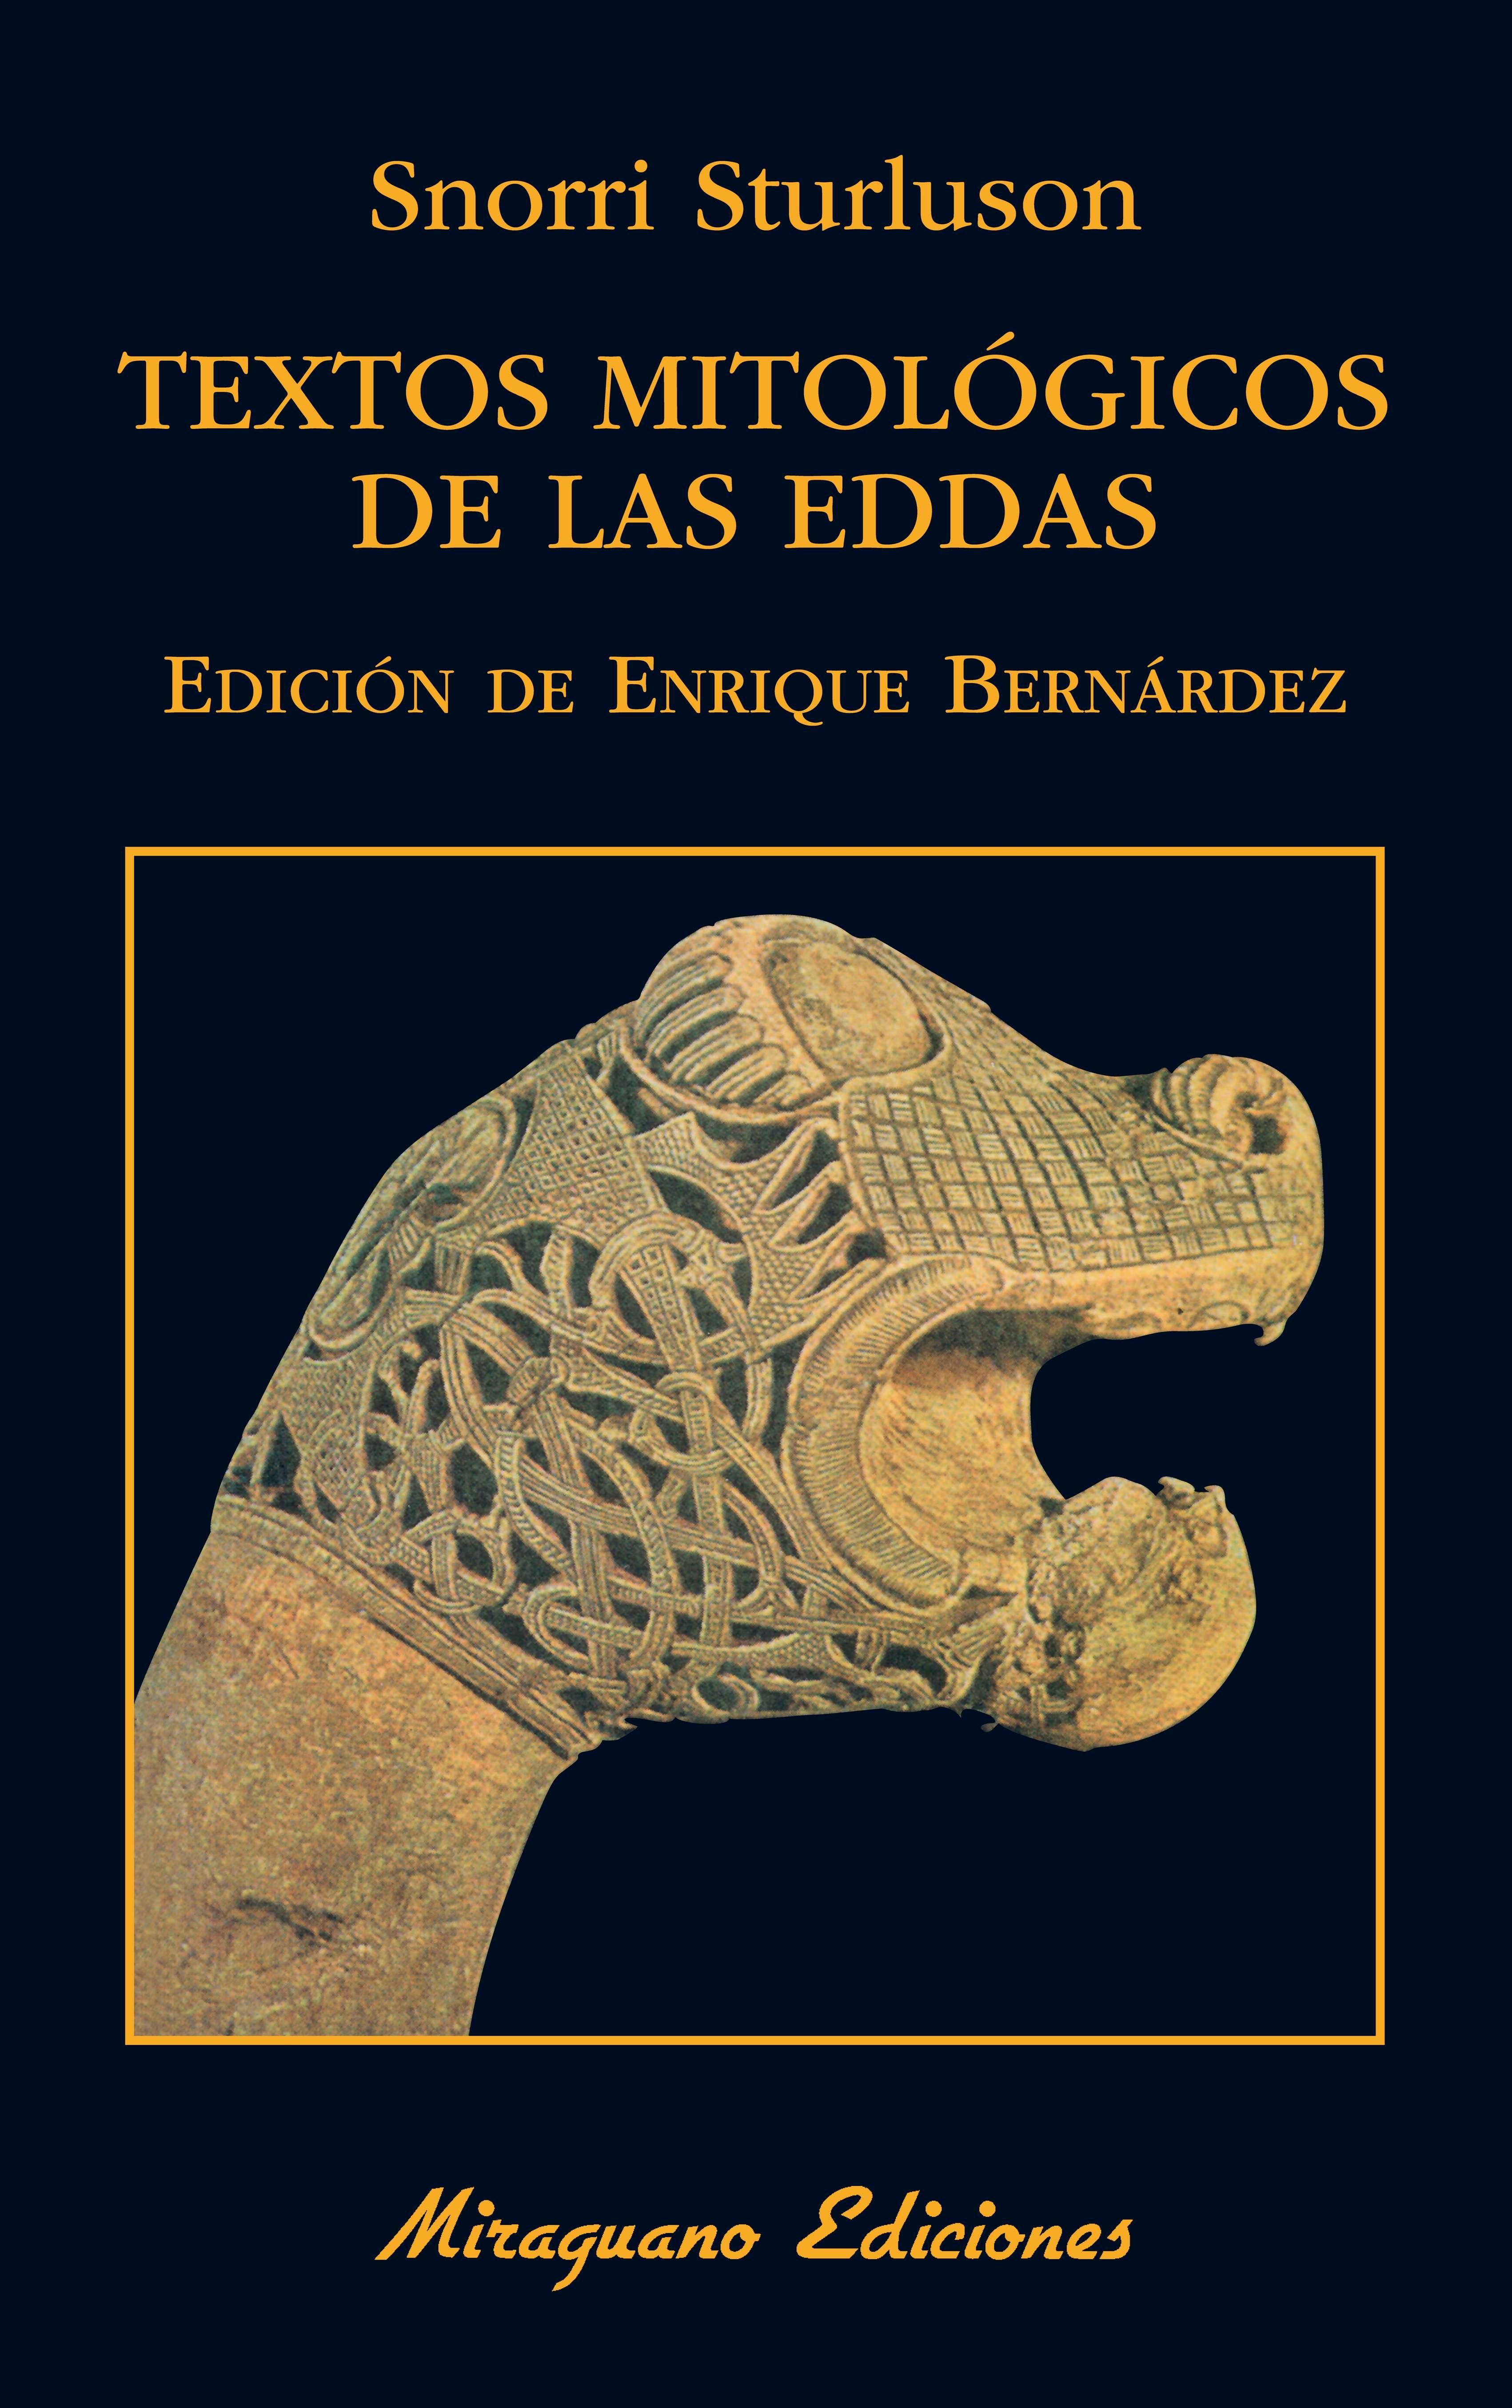 Textos Mitológicos de las Eddas